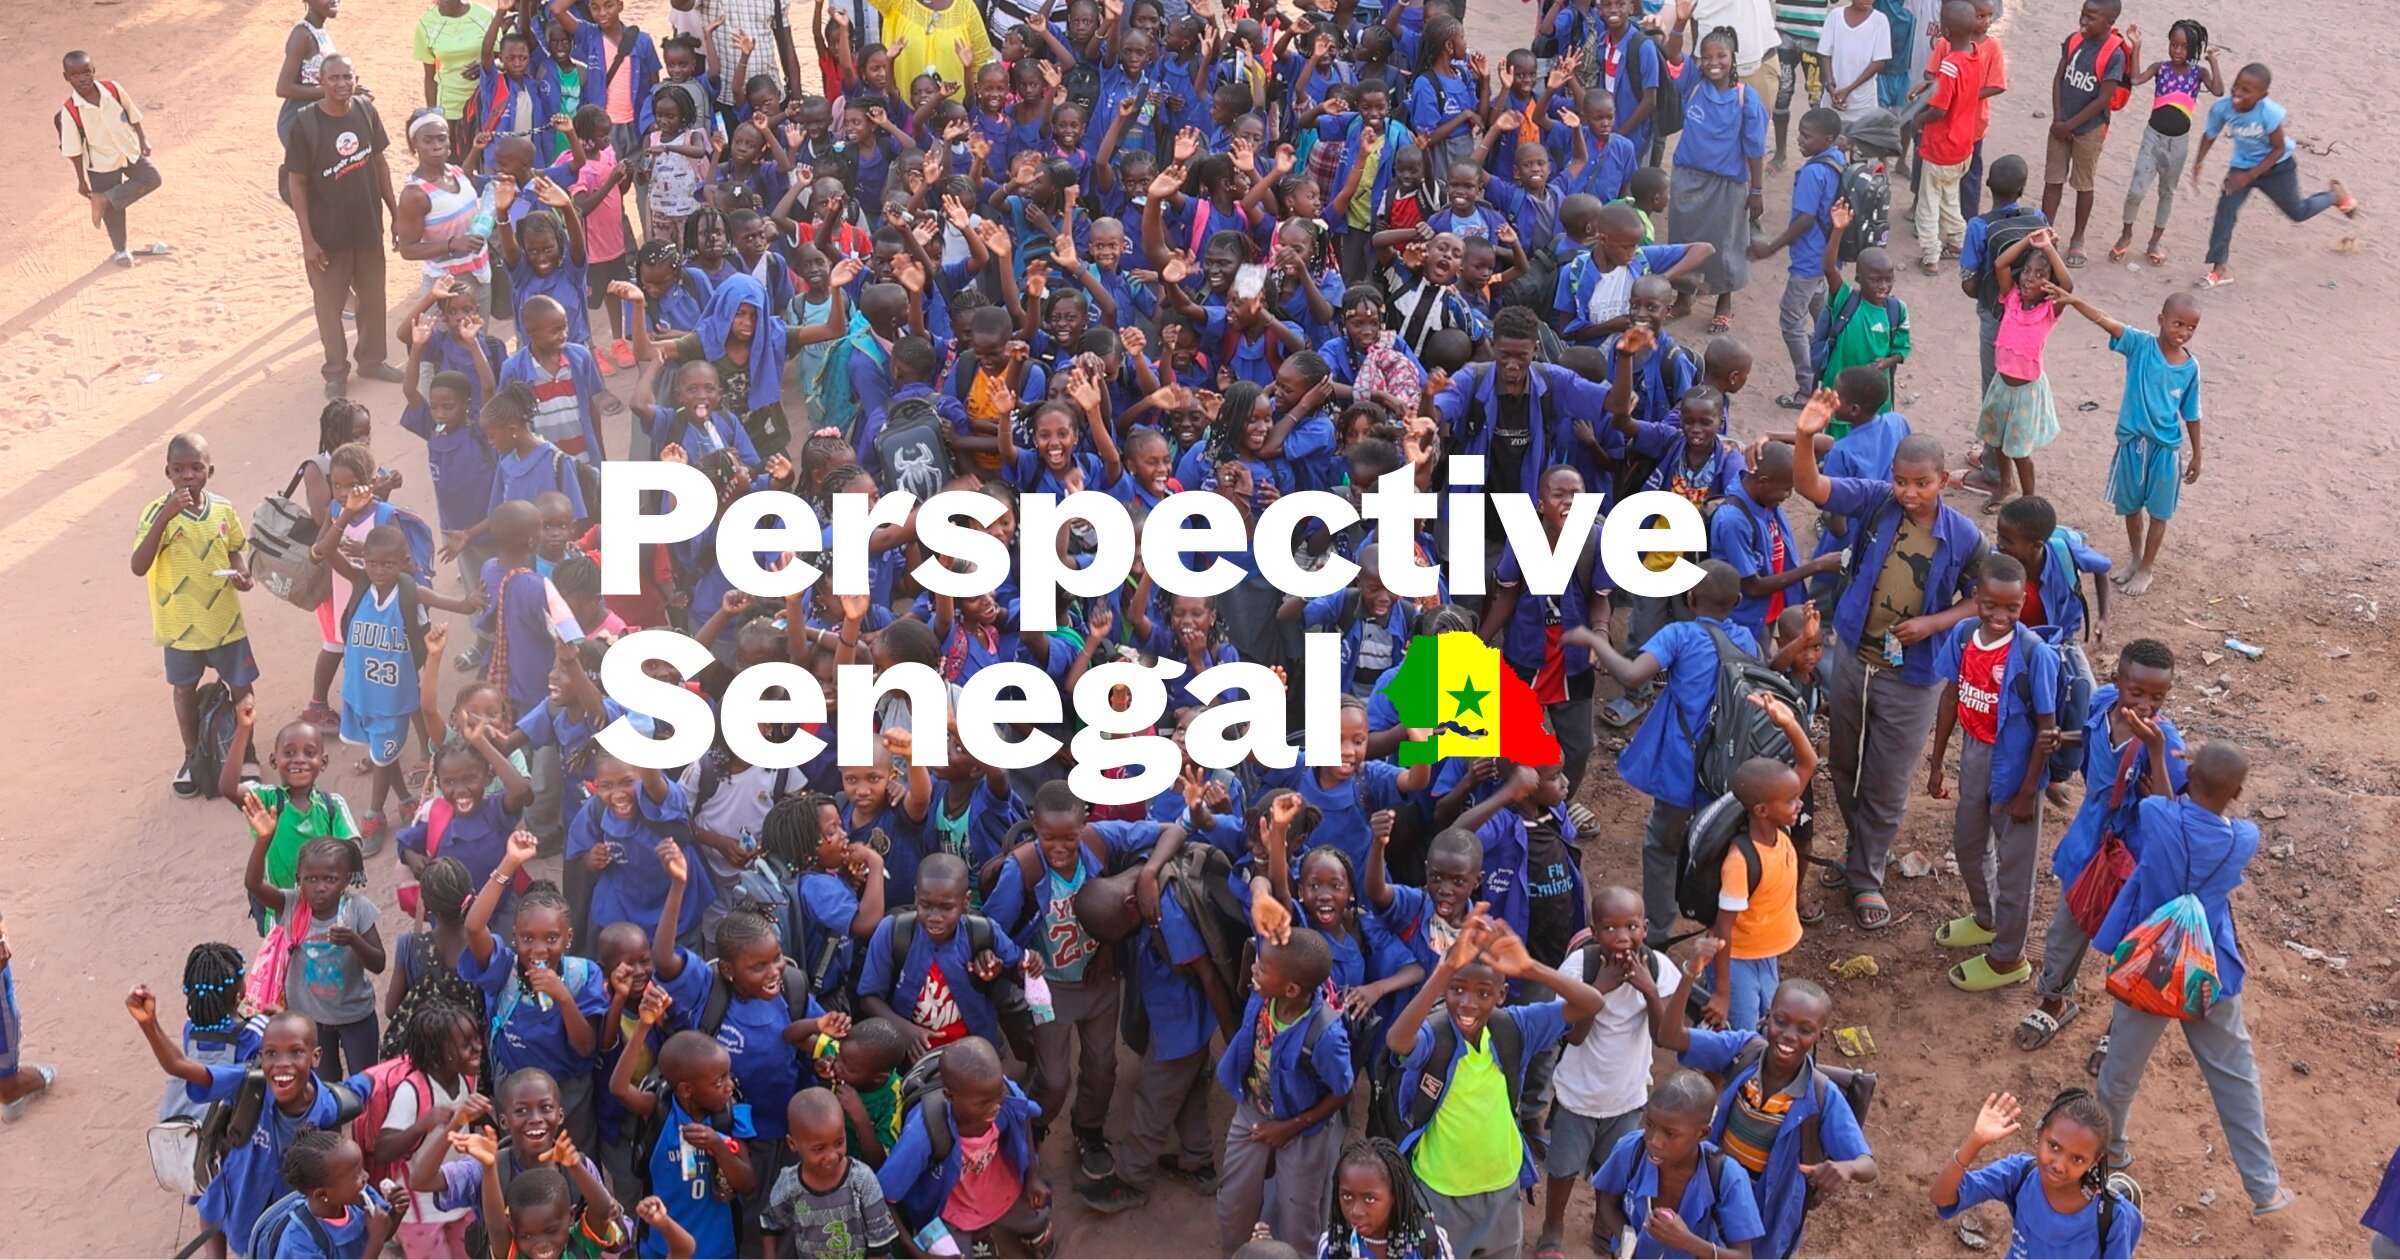 (c) Perspective-senegal.org